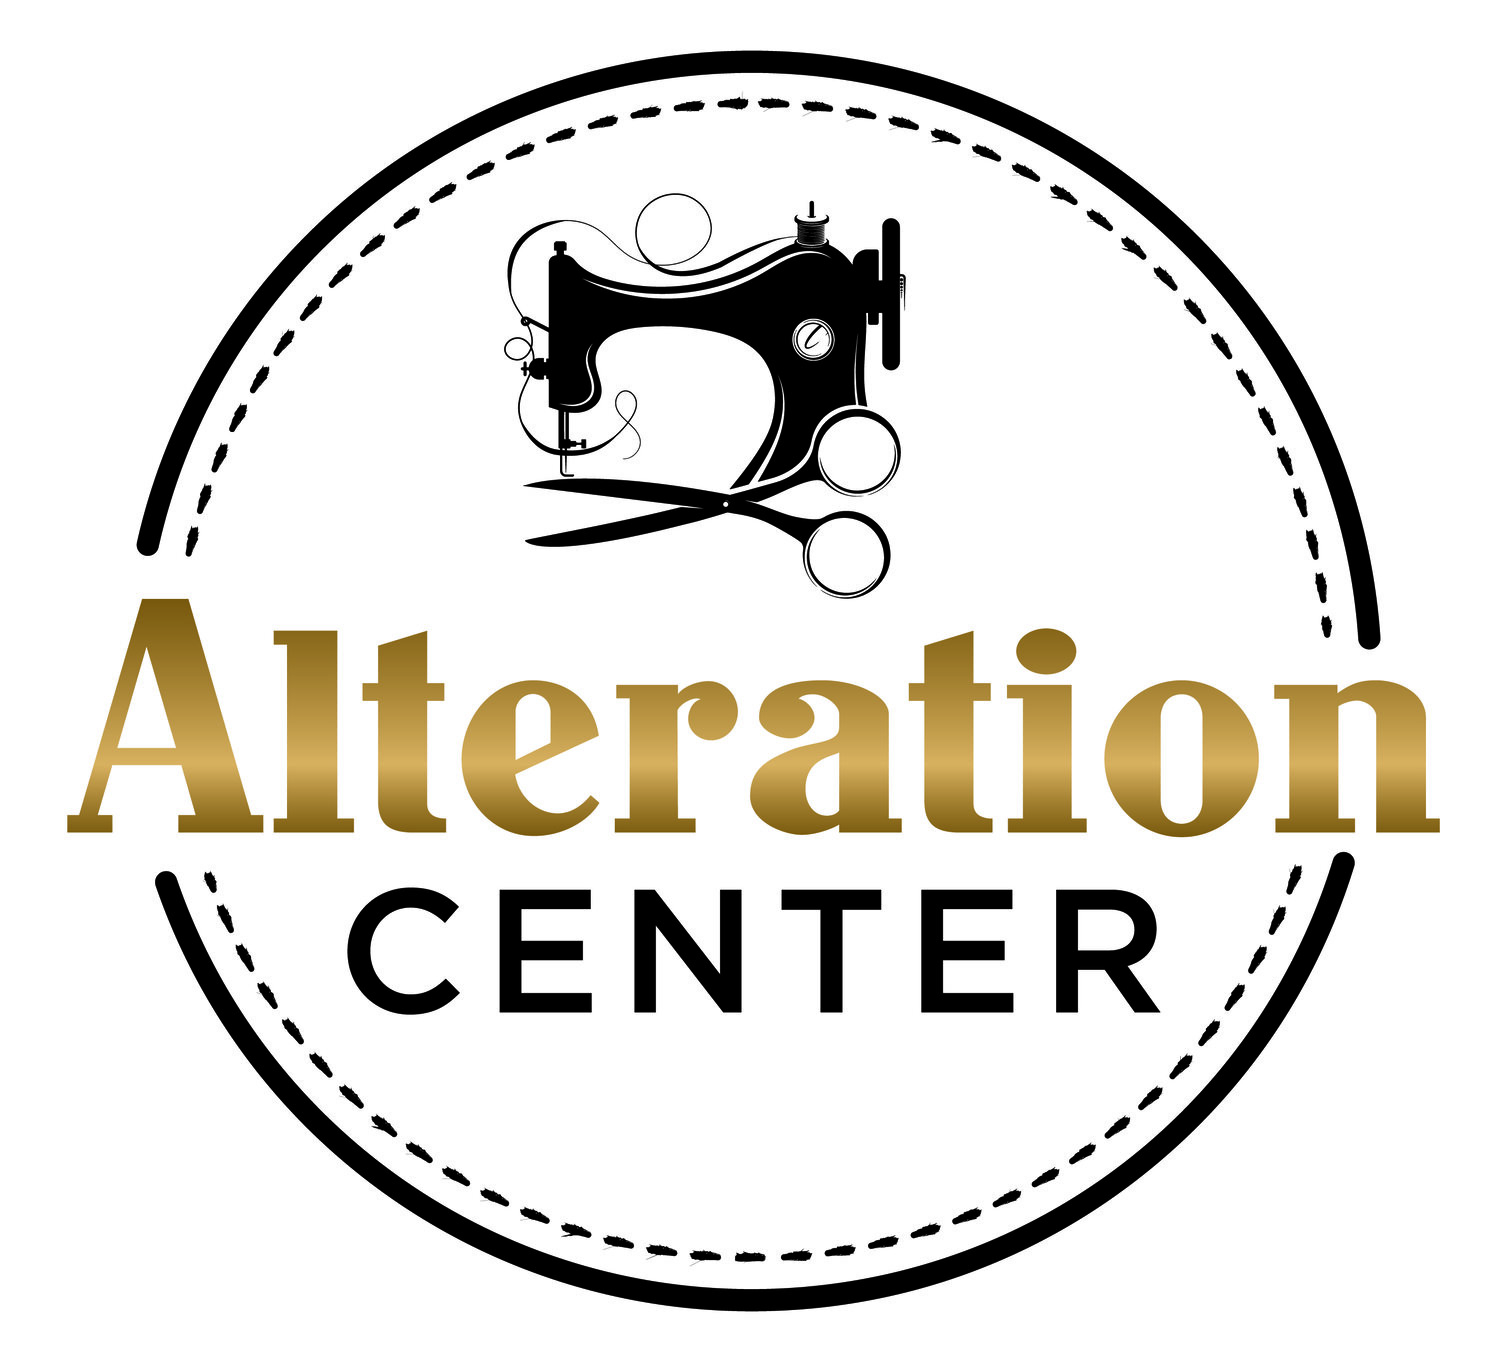  Alteration Center